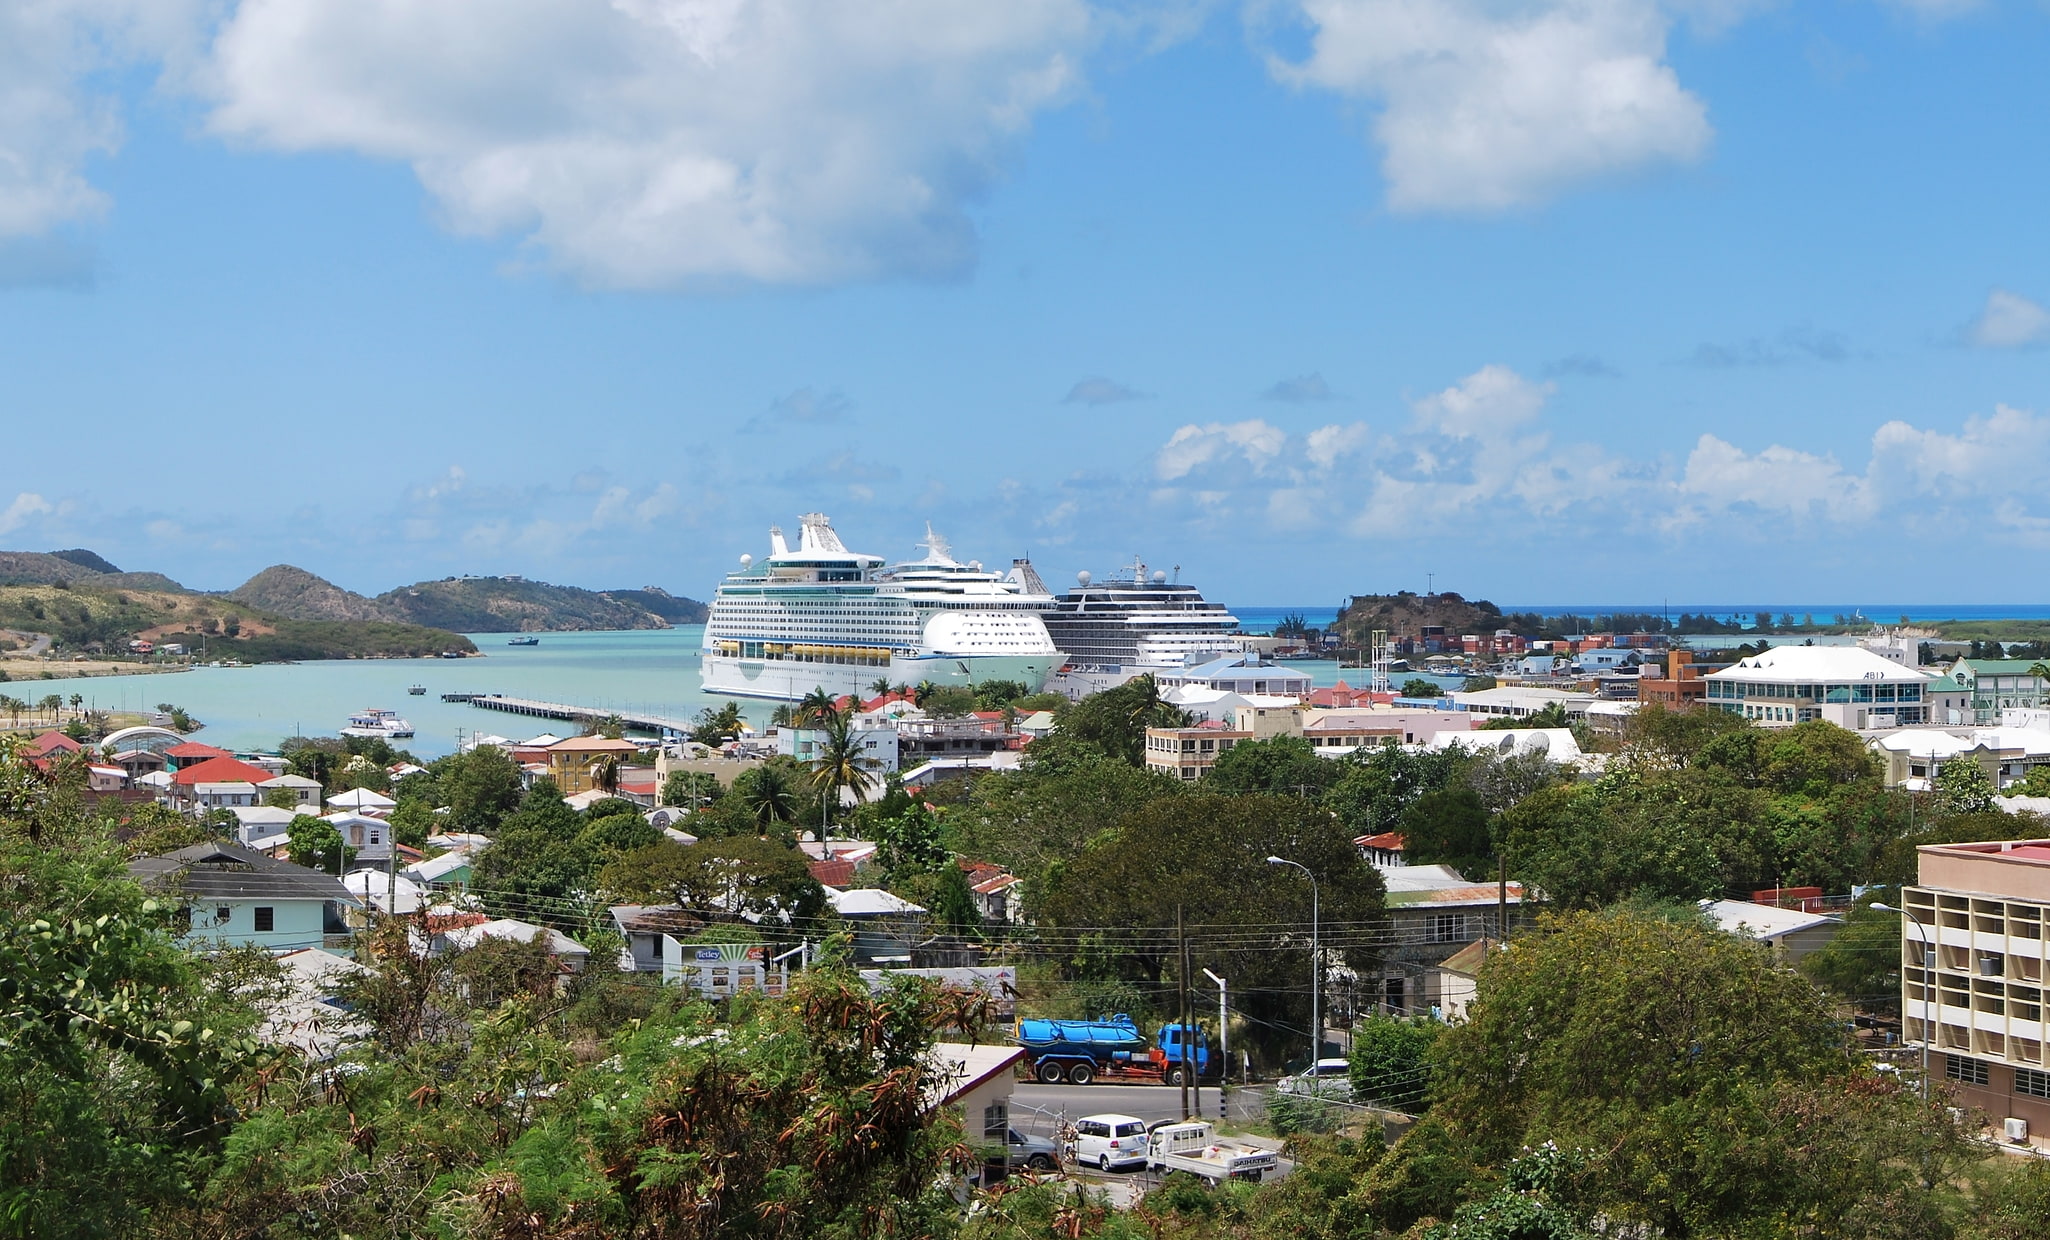 Saint John's, Antigua and Barbuda